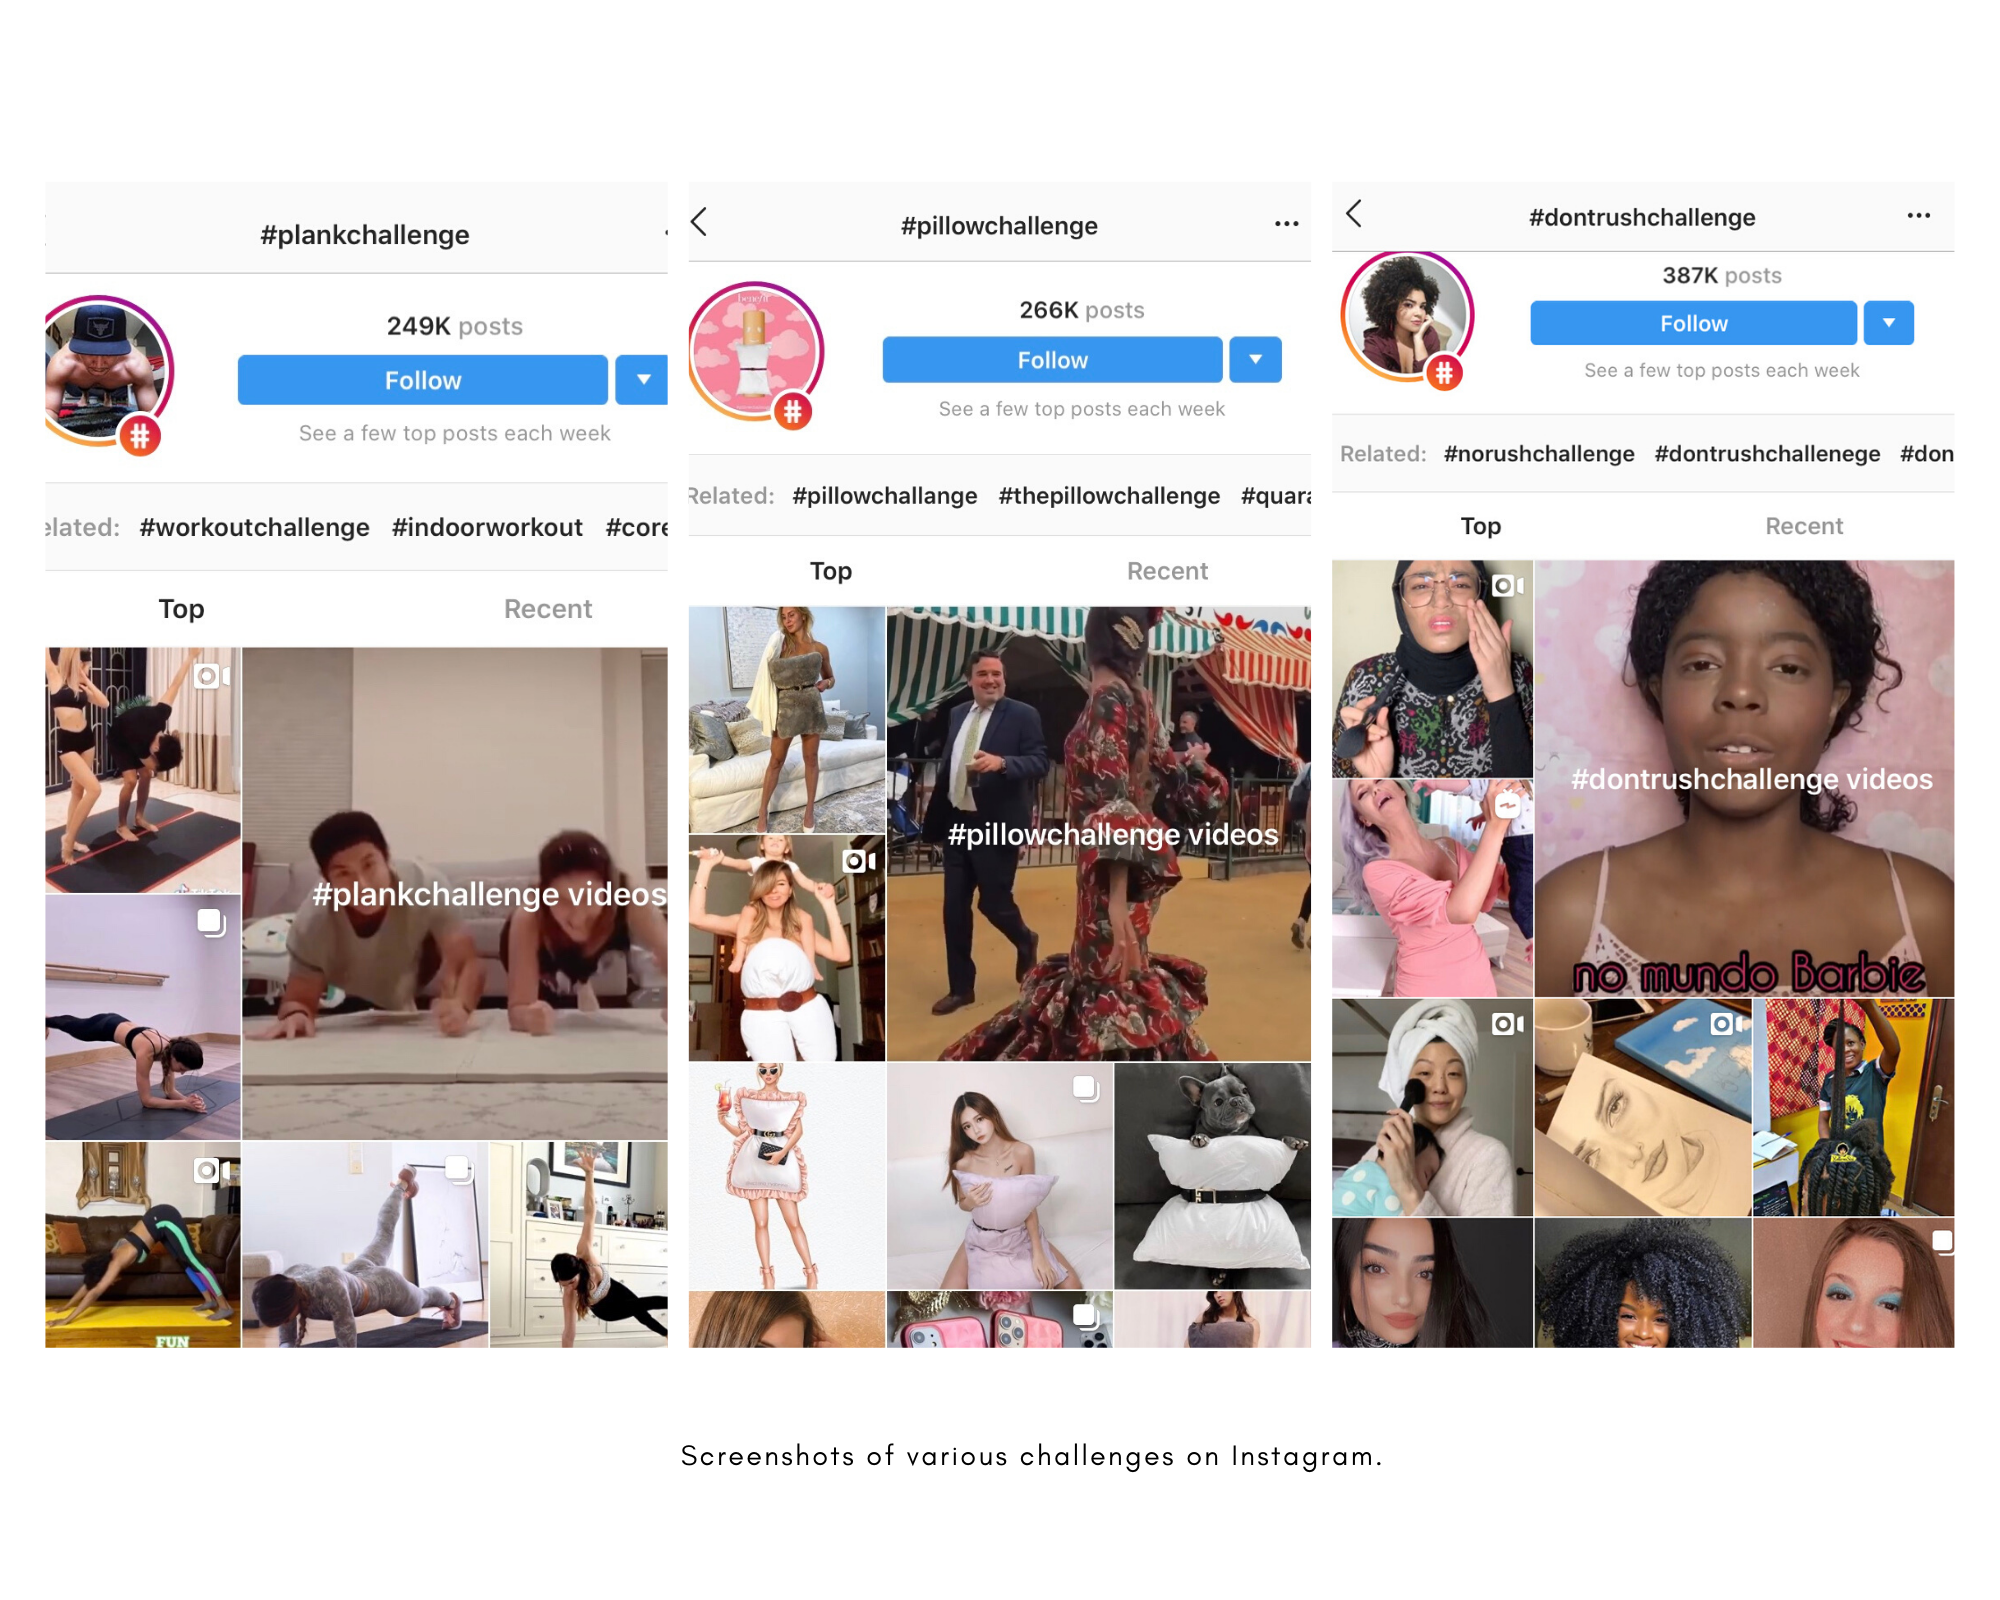 Screenshots of various challenges on Instagram.